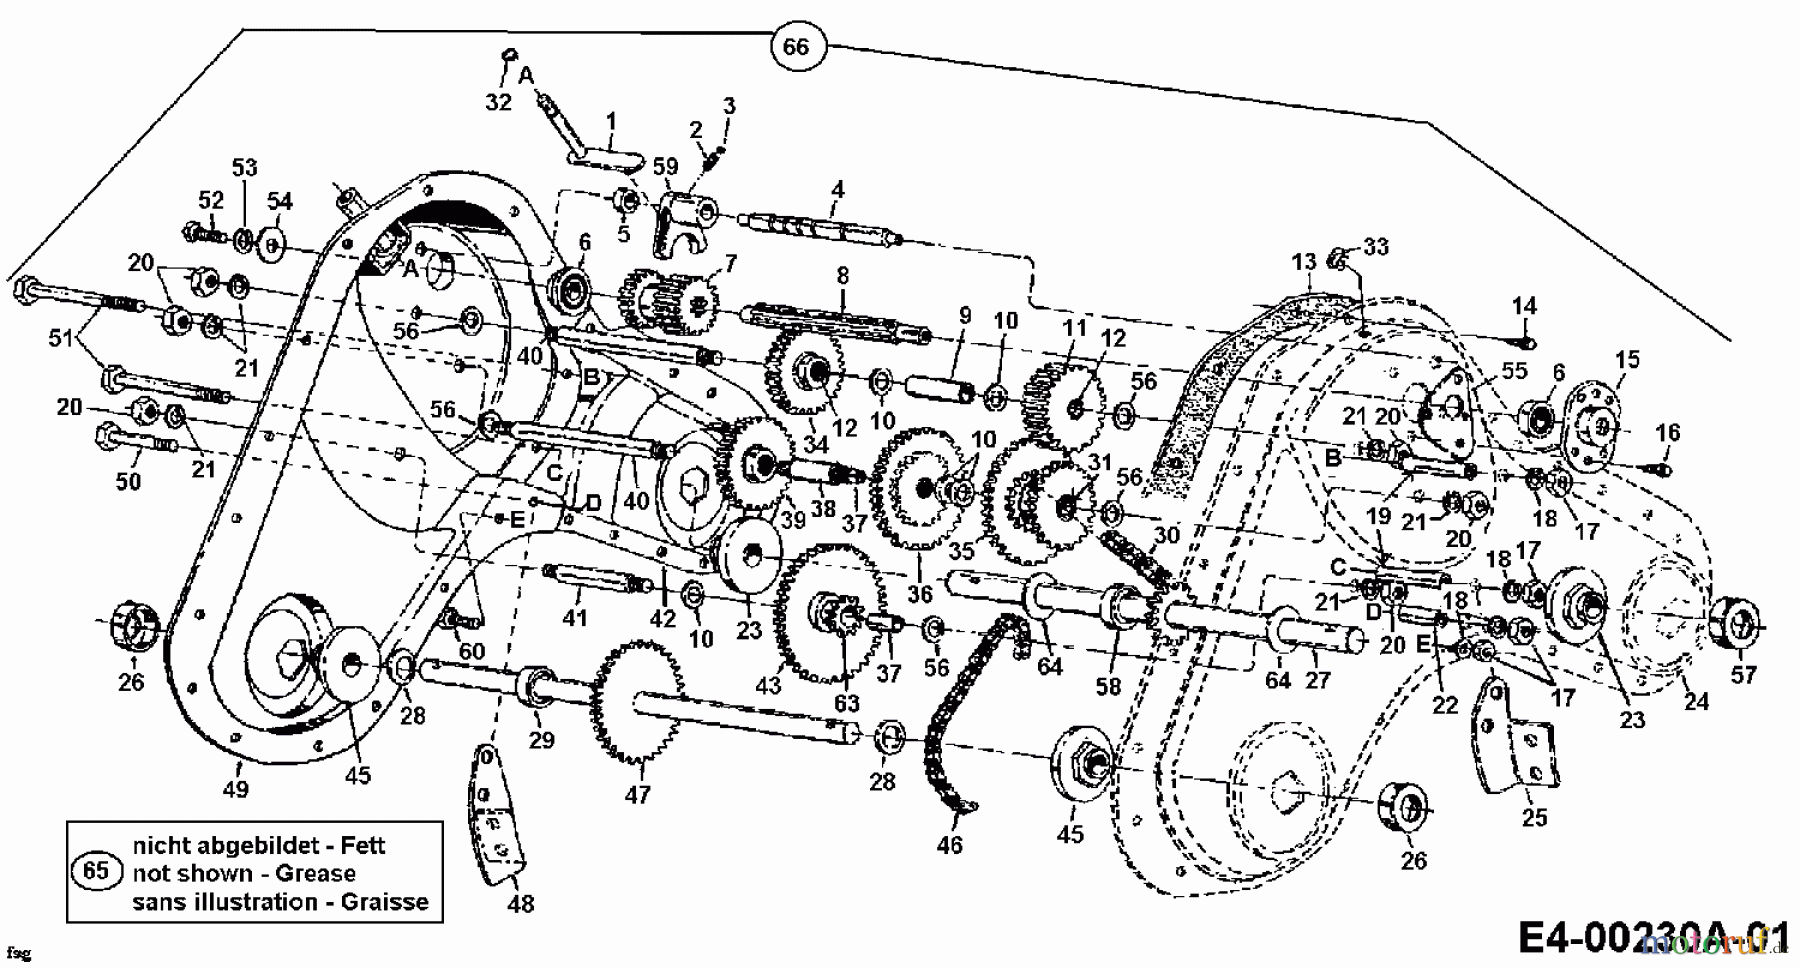  Kuhn Motorhacken AR 50 21A-447-612  (1998) Getriebe